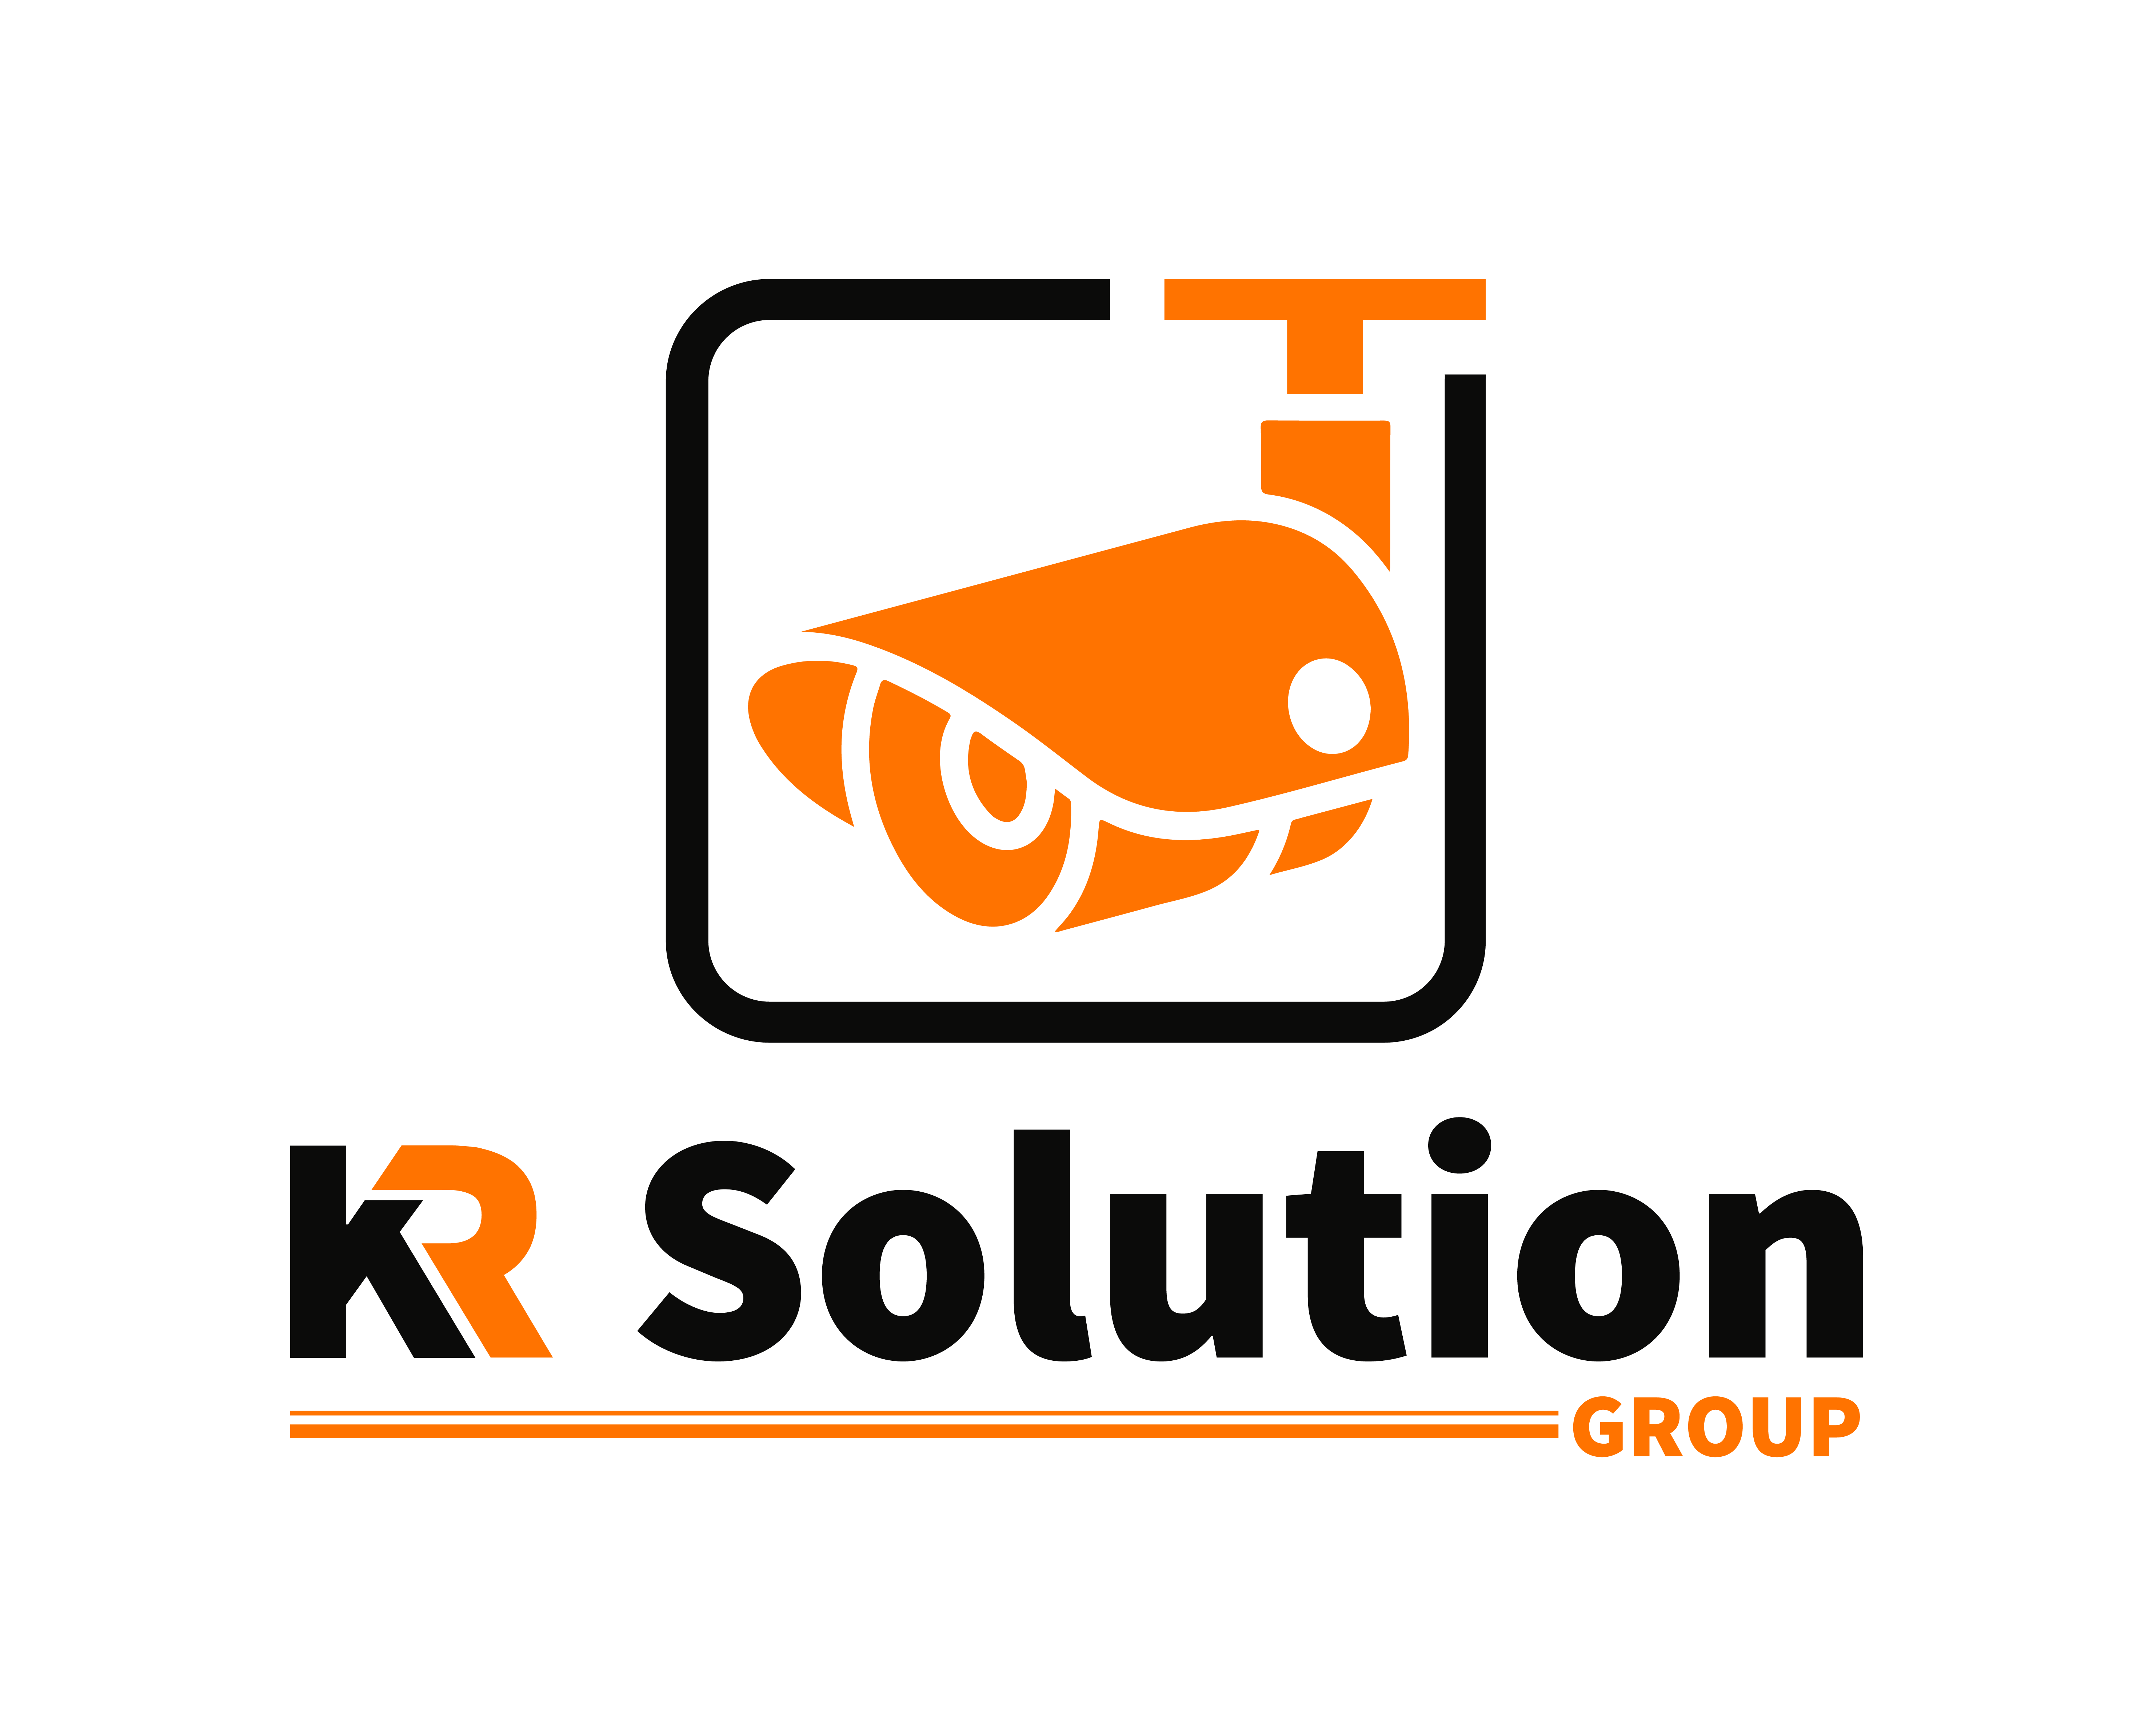 KR Solution Group